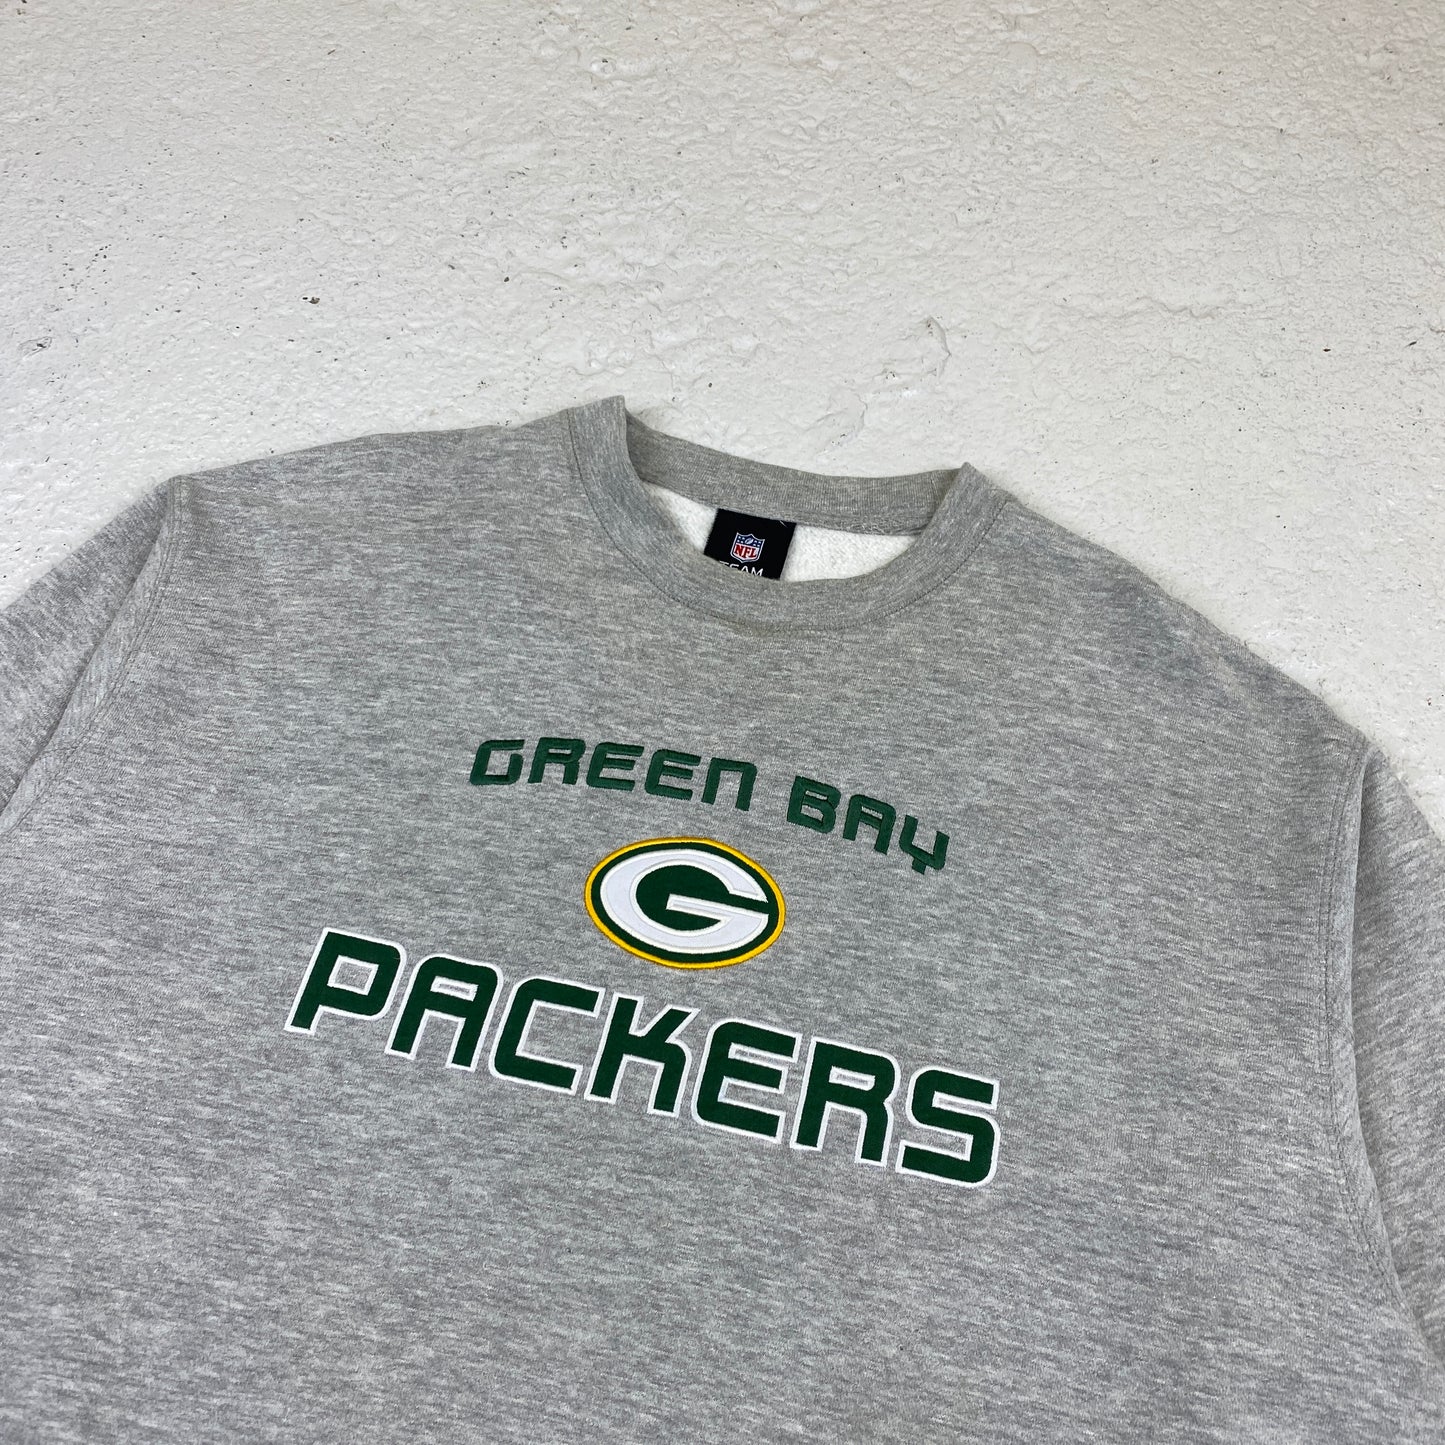 Green Bay Packers heavyweight sweater (XL)